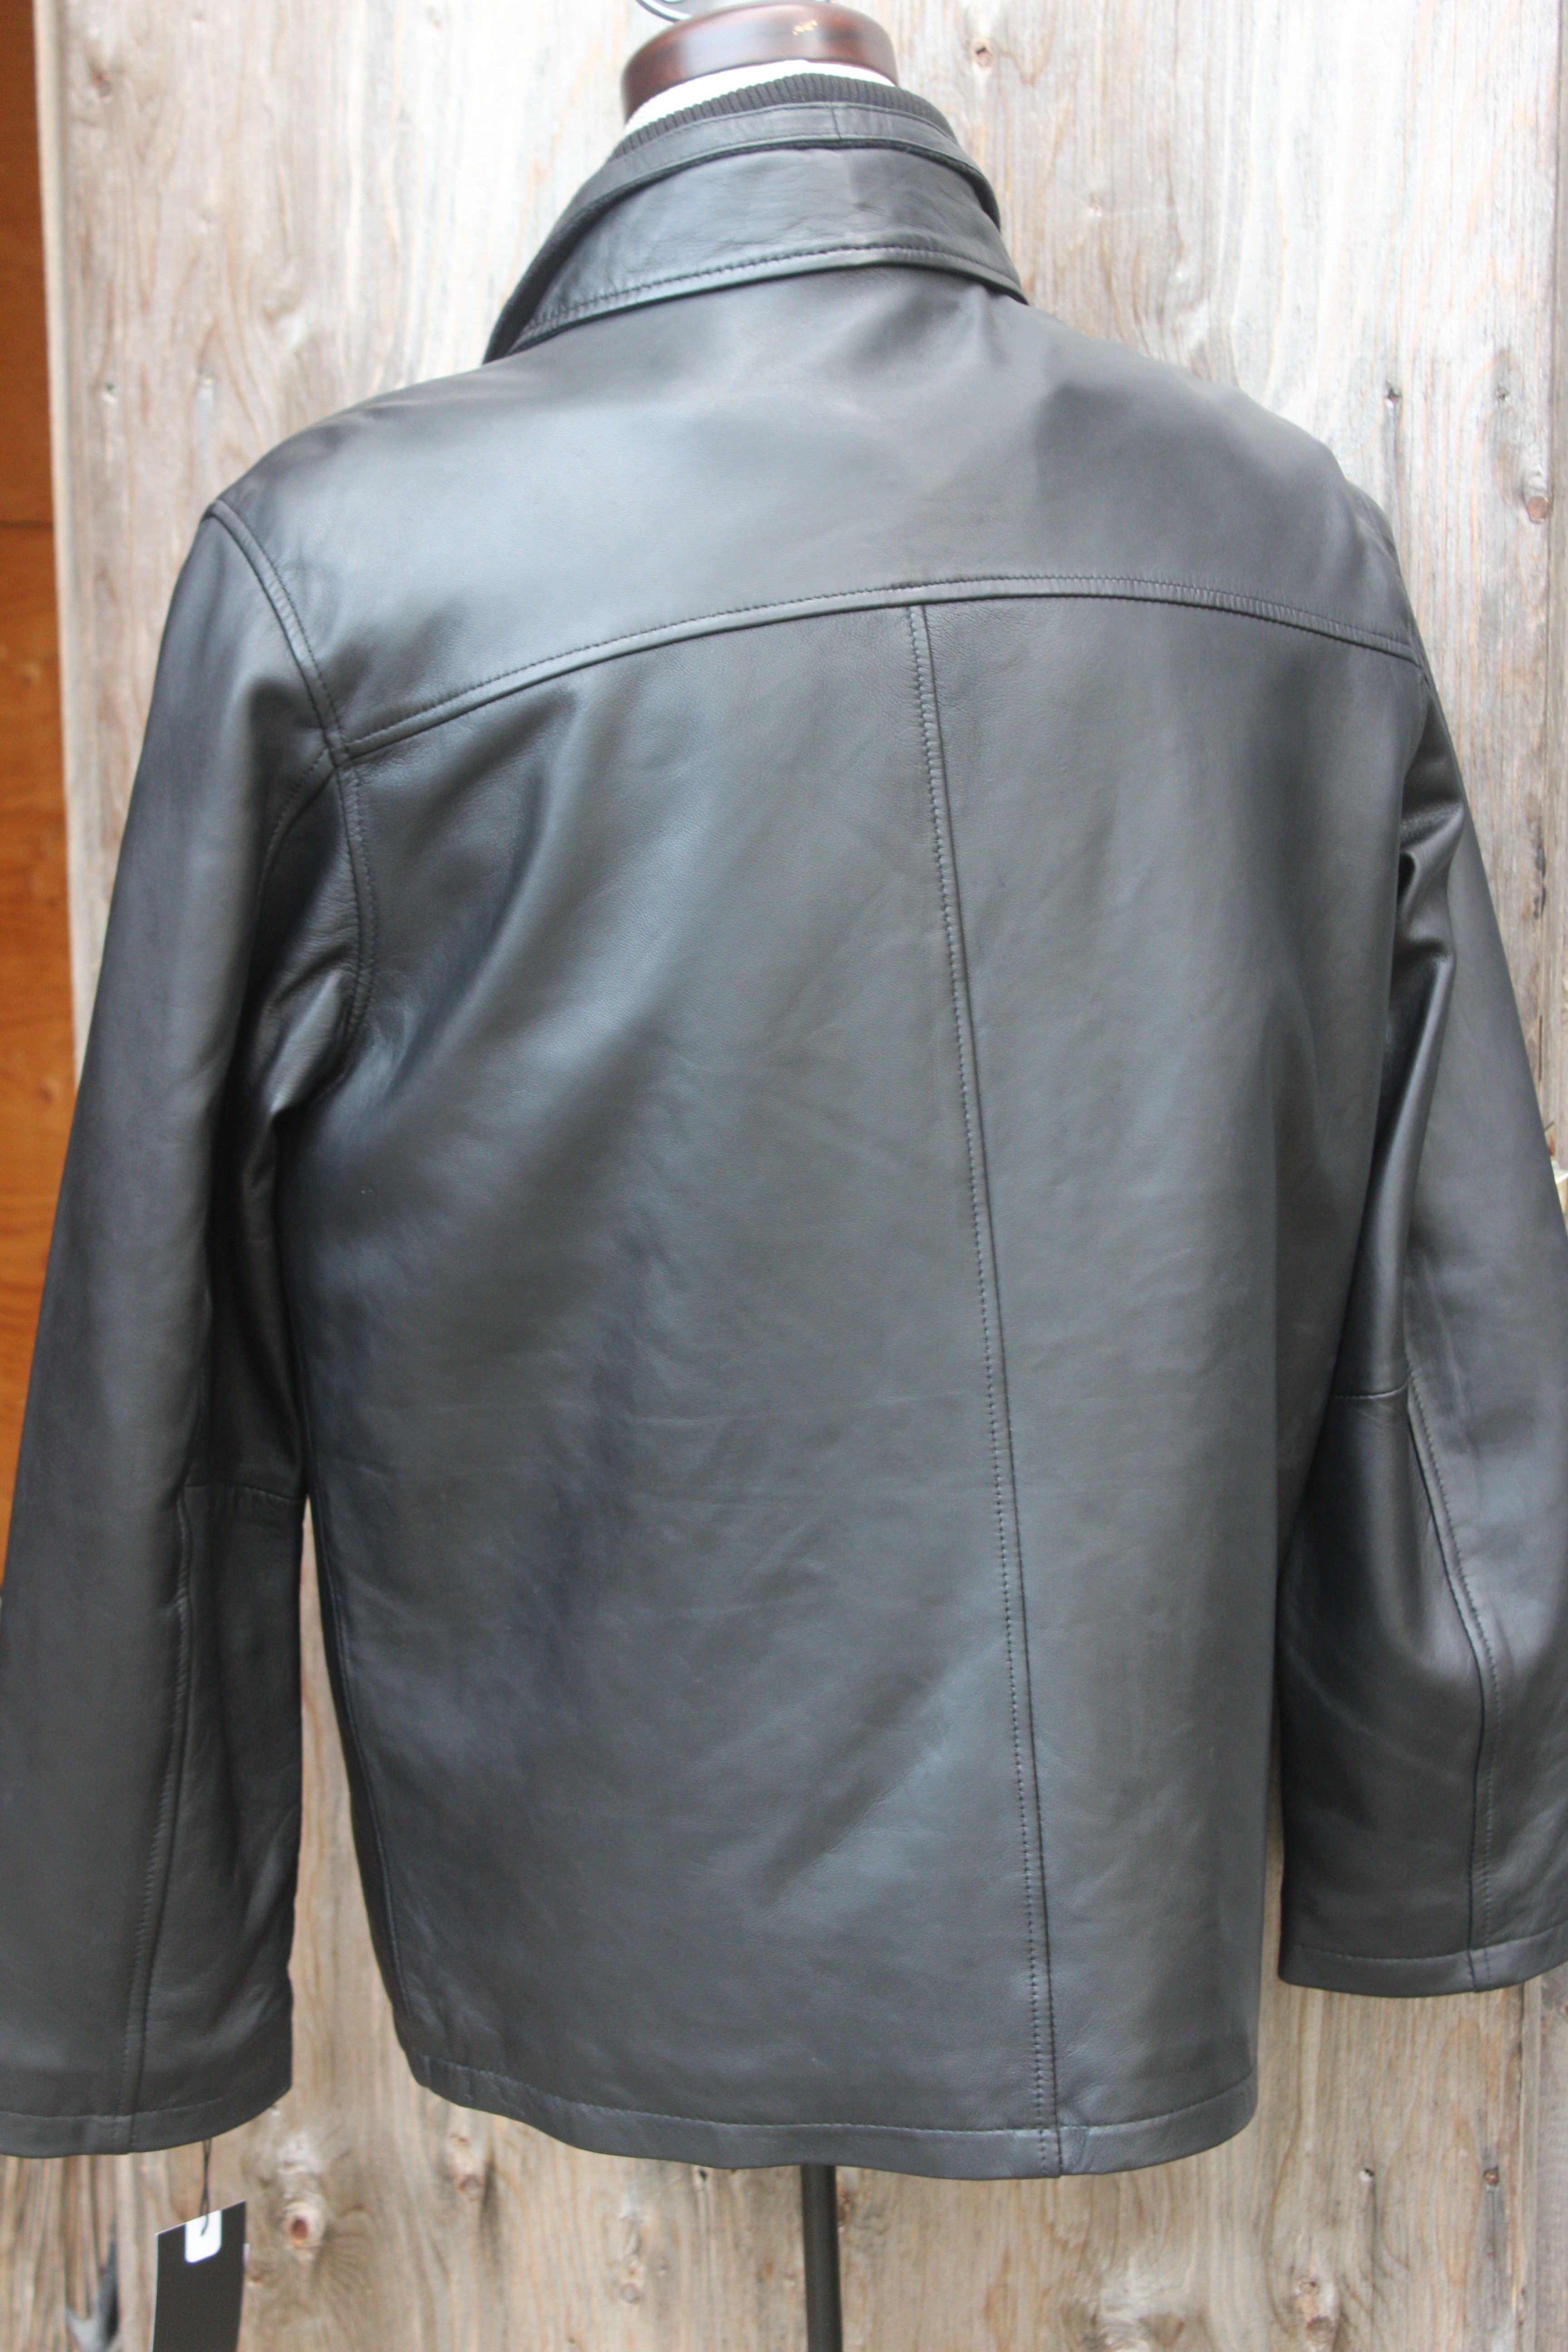 Black Leather - $425.00
Plonge Leathers
Style #: 40600B